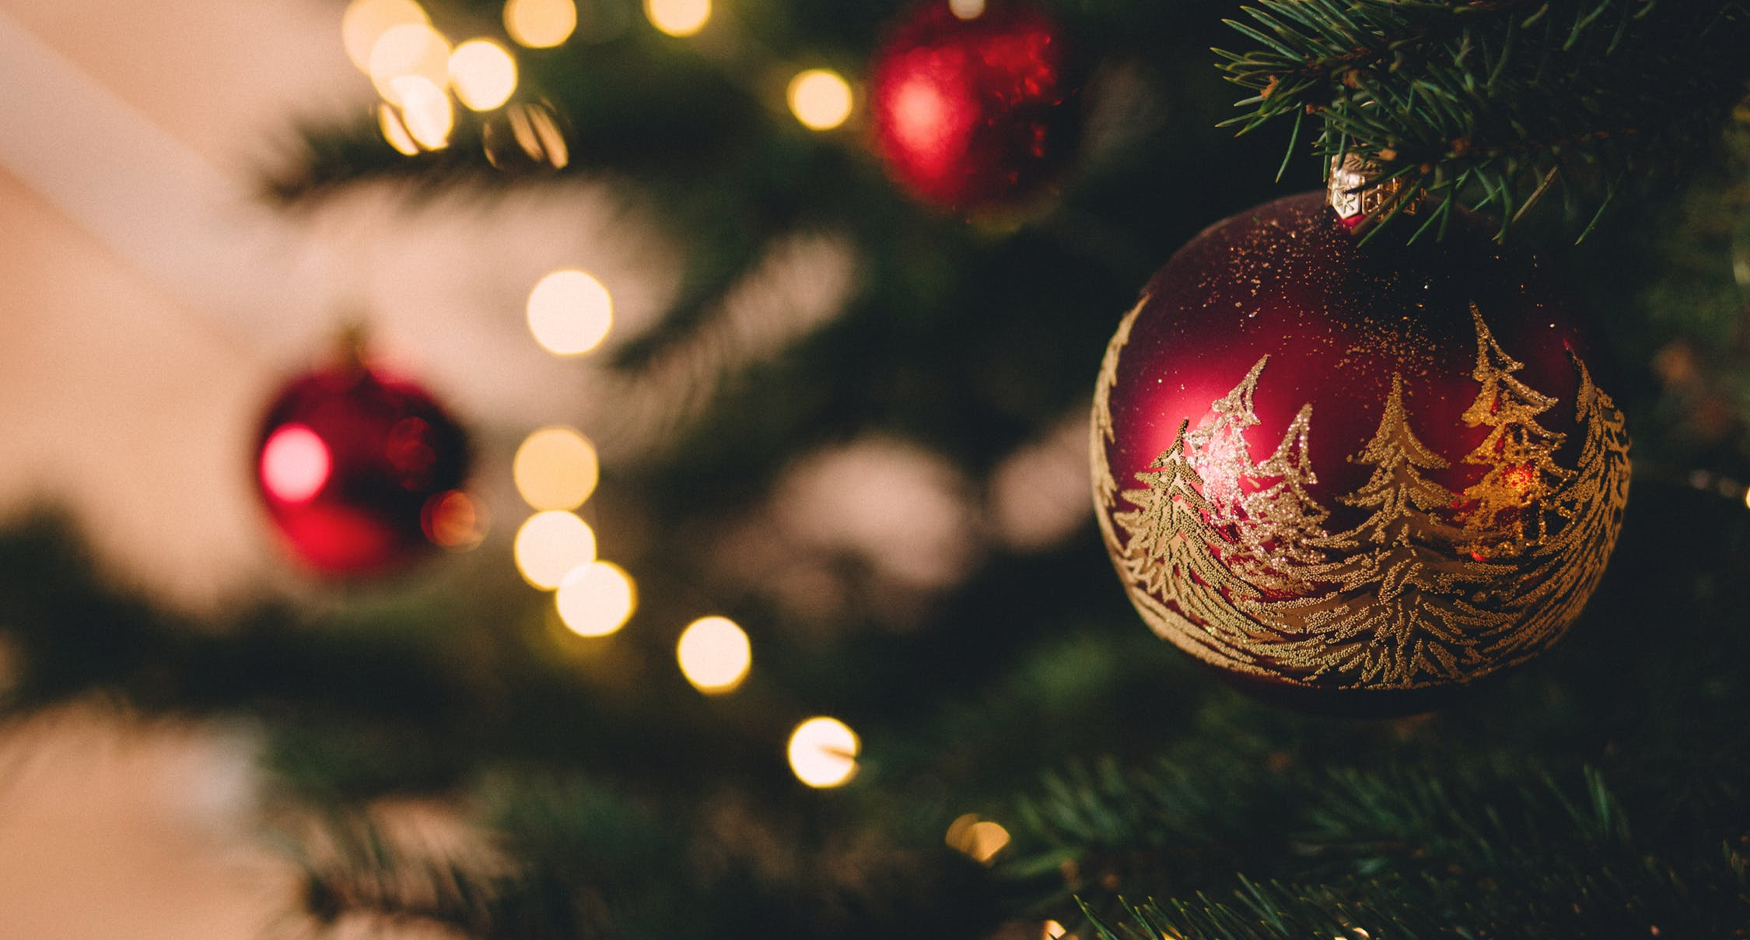 December 25: Merry Christmas or Merry Sun?